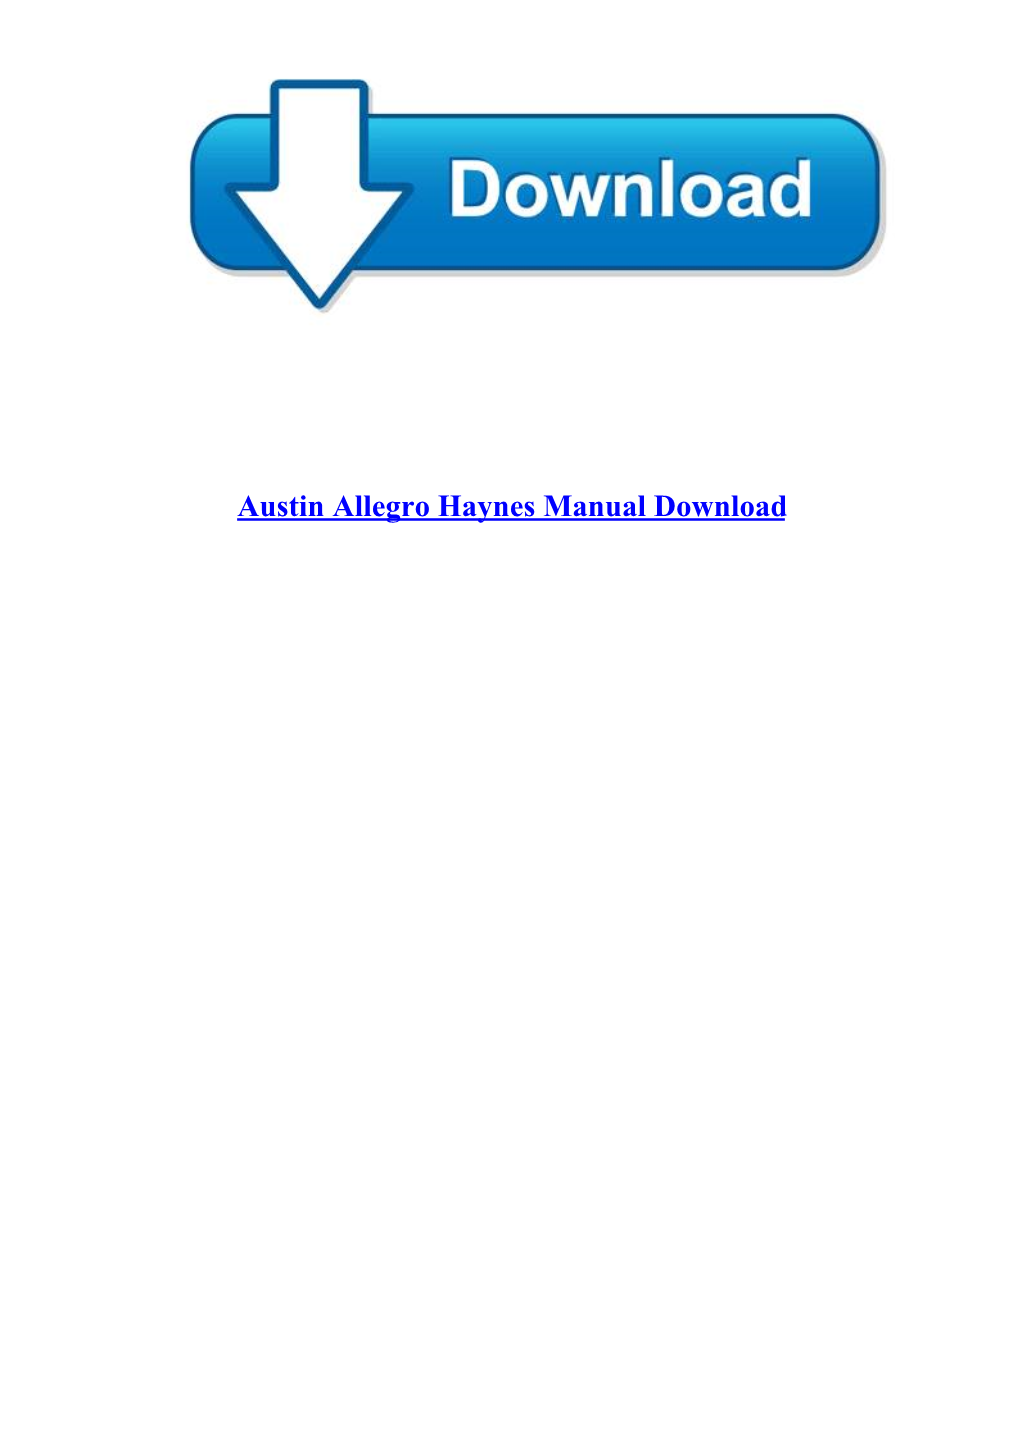 Austin Allegro Haynes Manual Download Austin Allegro Haynes Manual